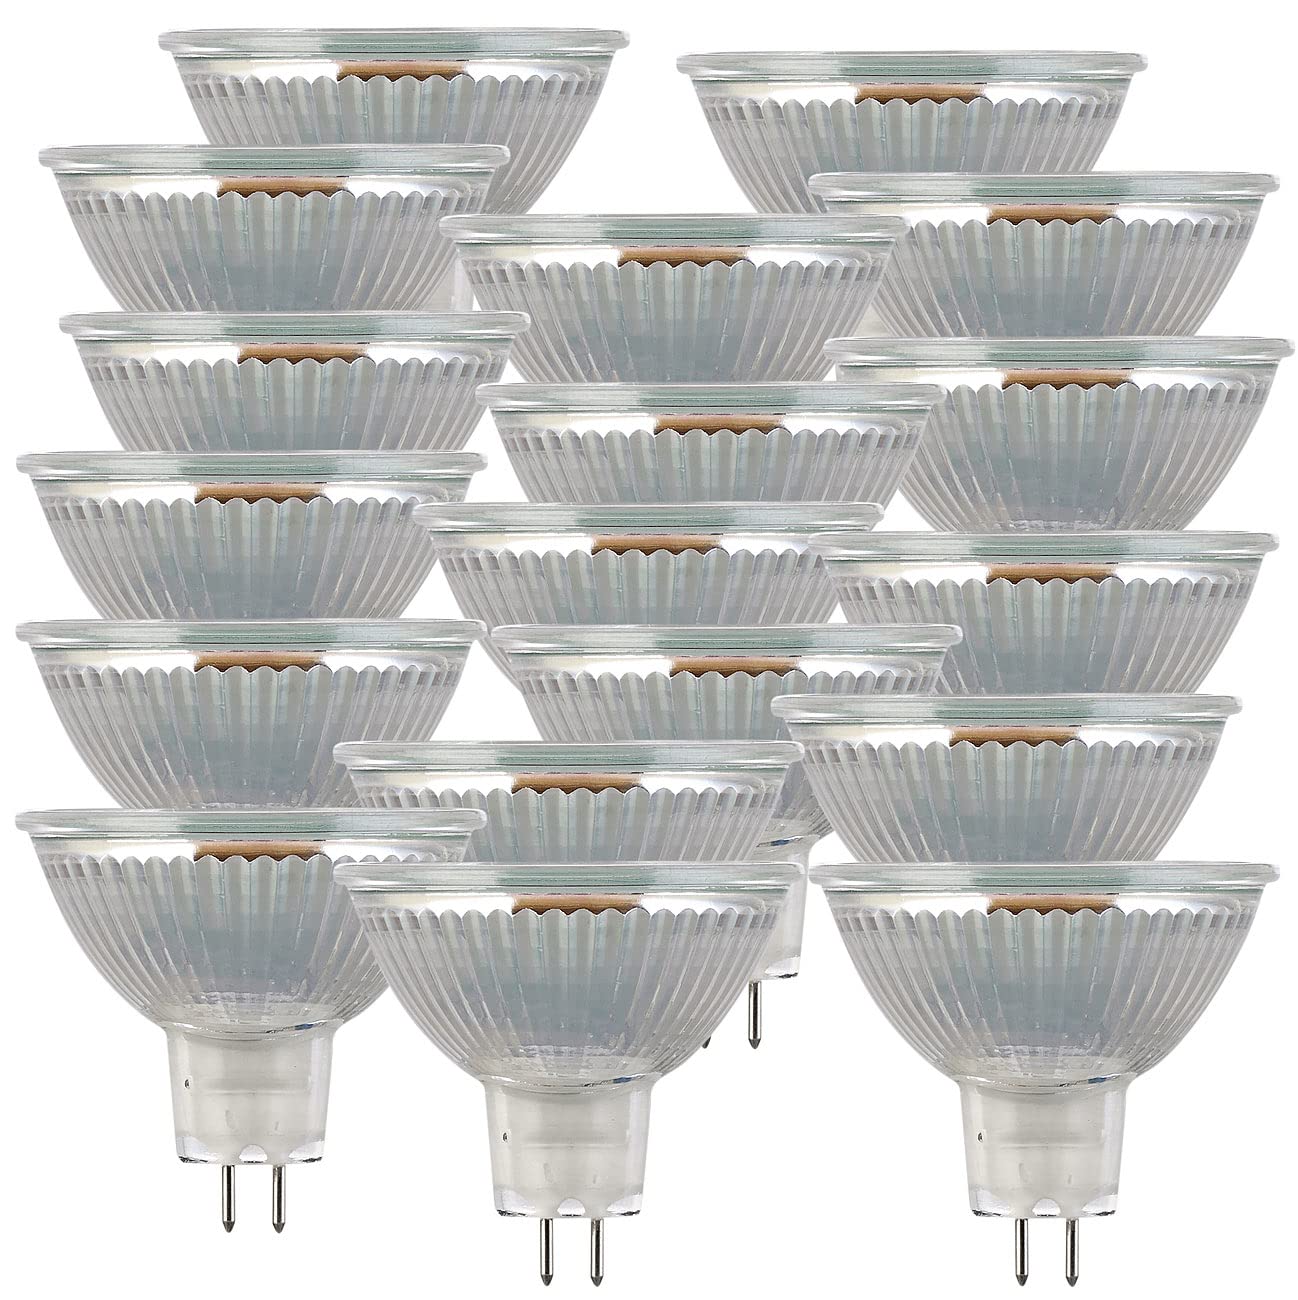 Luminea Gu5.3 LED-Lampen: 18er-Set LED-Glas-Spots, GU5.3, 3 W (ersetzt 25 W), tageslichtweiß (LED-Leuchtmittel Tageslichter, Gu5.3 LED-Lampenspot, Einbaustrahler)